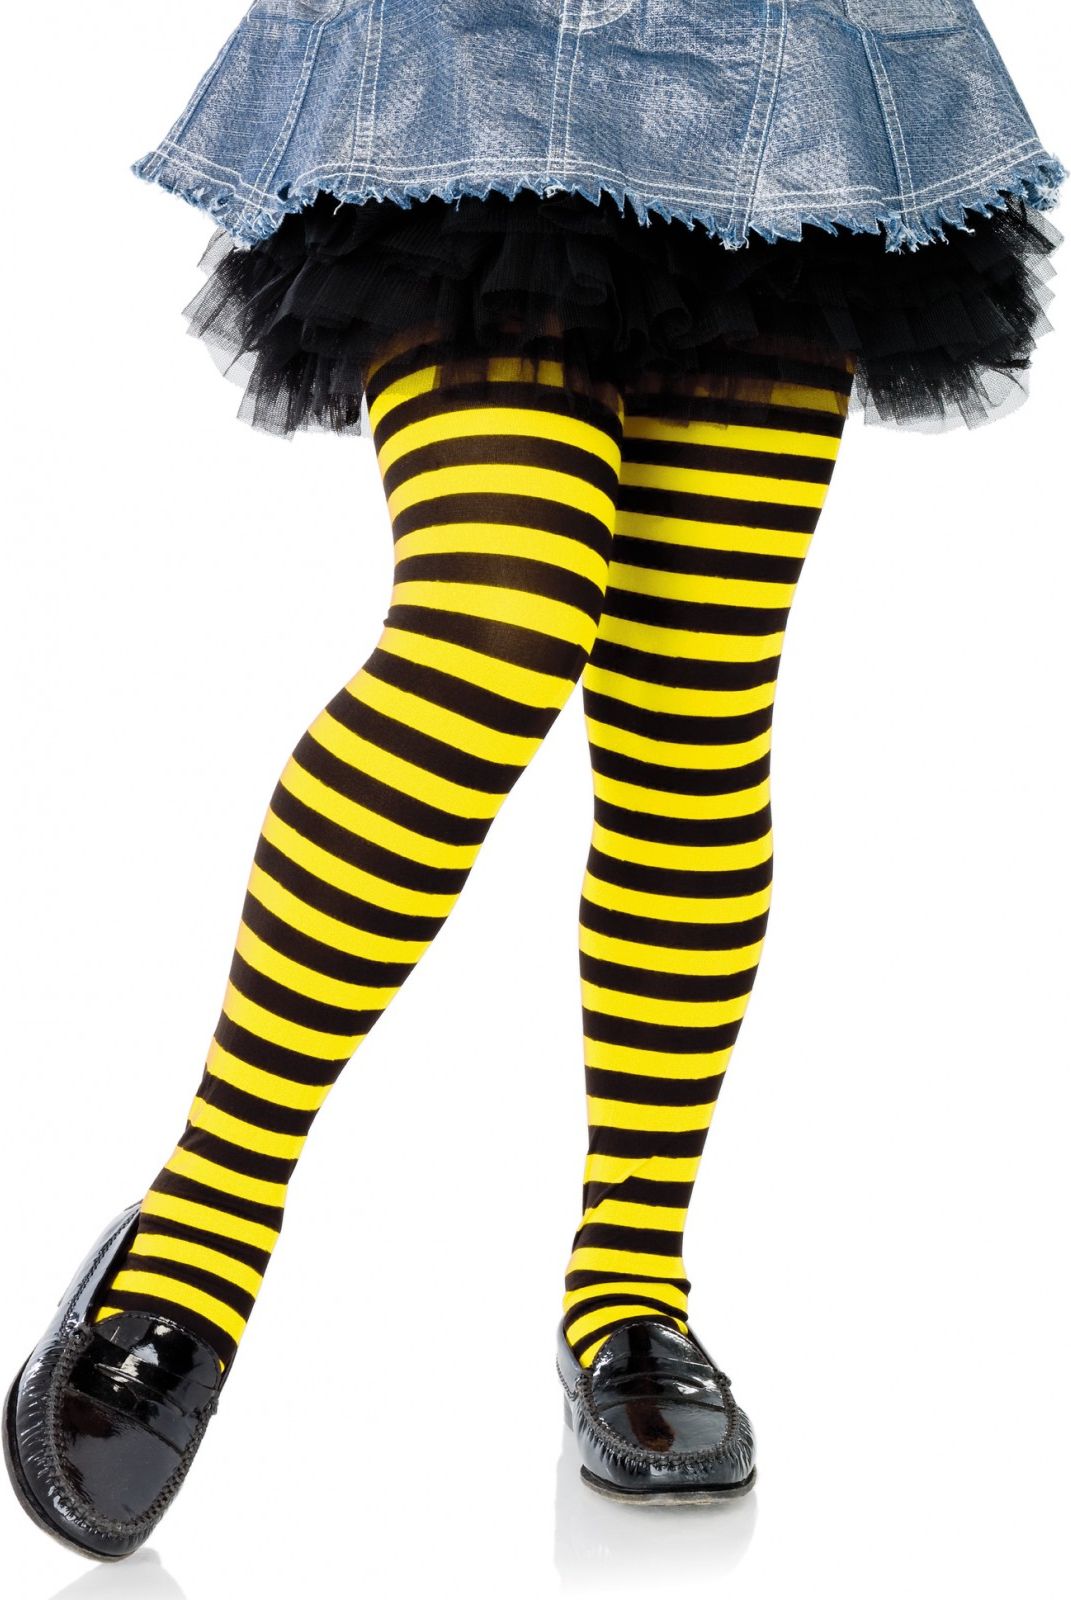 kern Min Kwik Zwart geel gestreepte panty kind | Carnavalskleding.nl